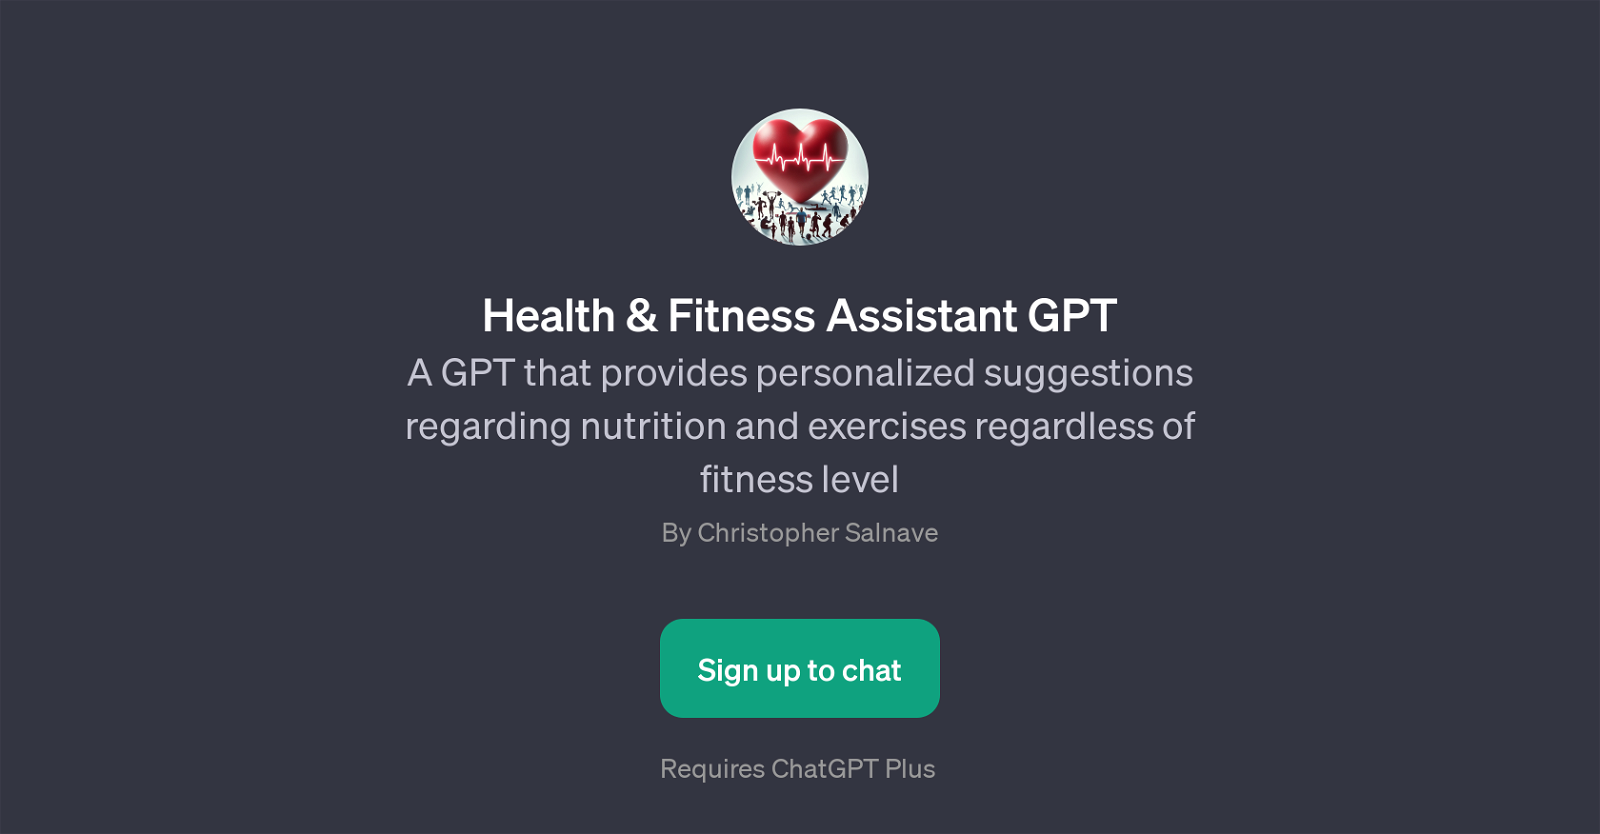 Health & Fitness Assistant GPT website